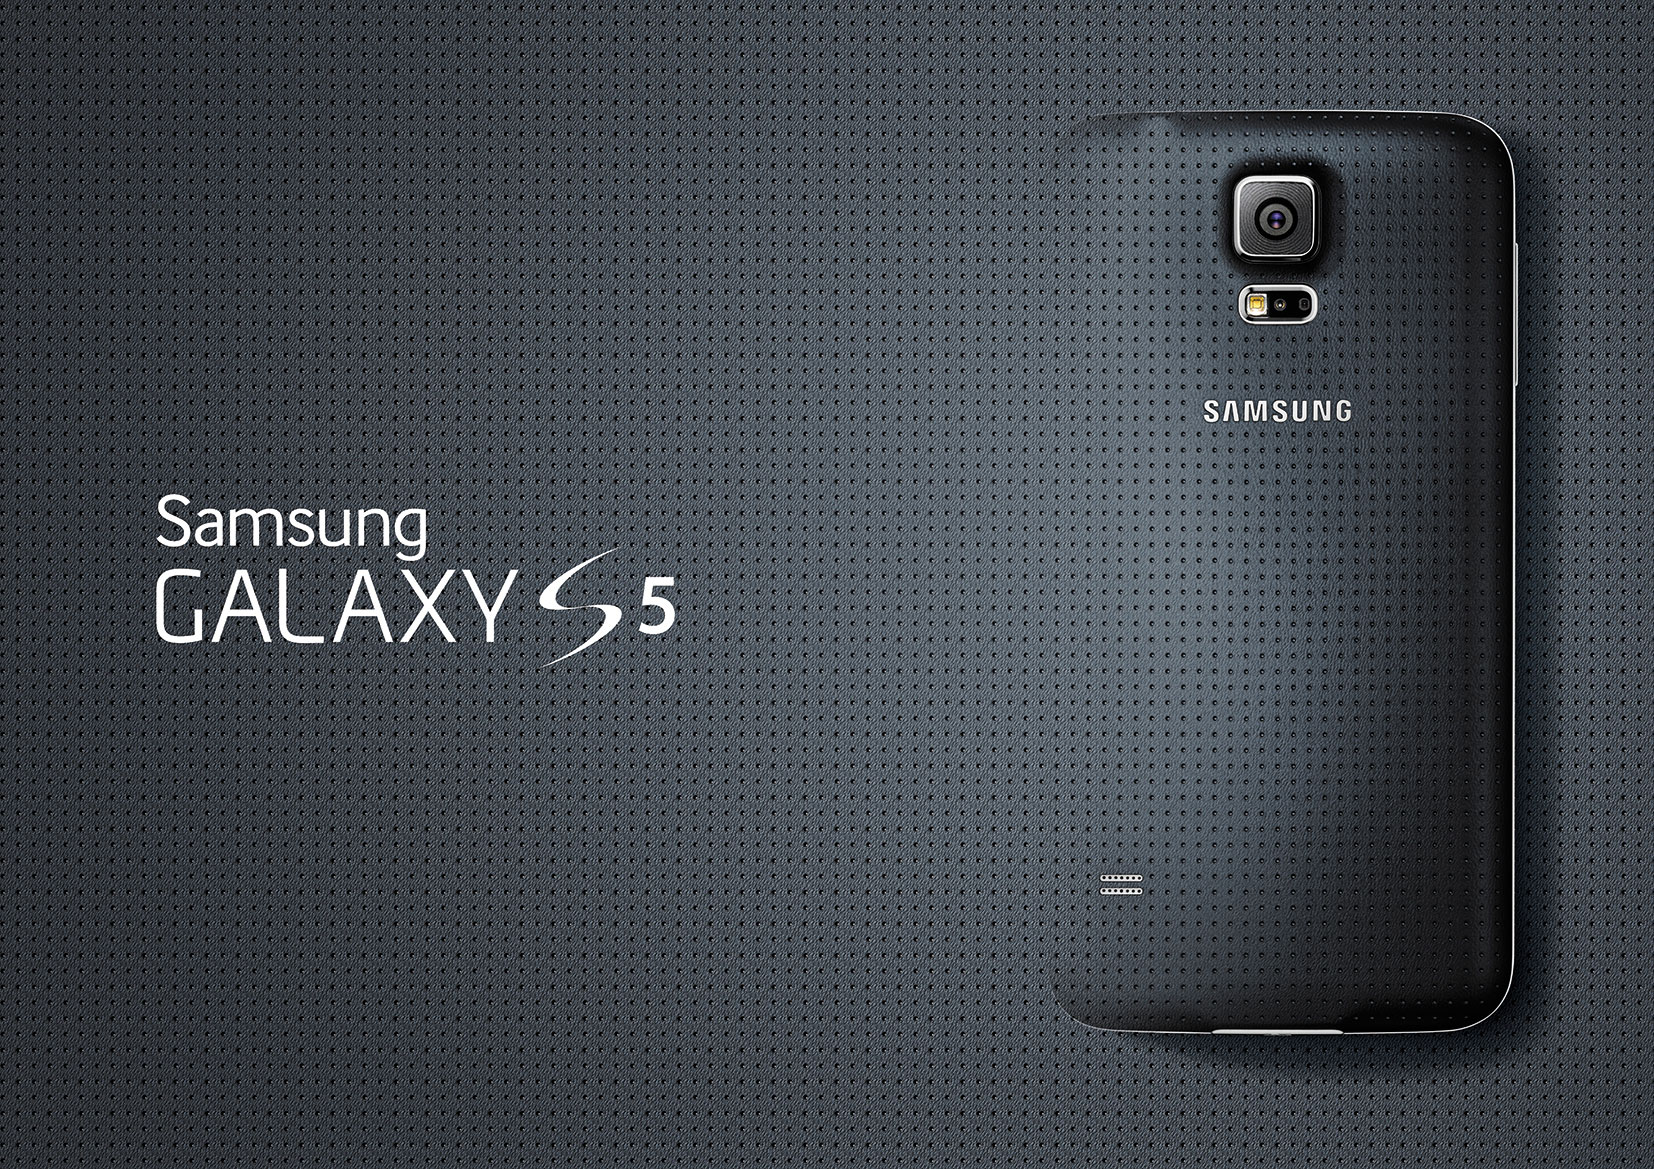 Samsung-Galaxy S5-image-gallery